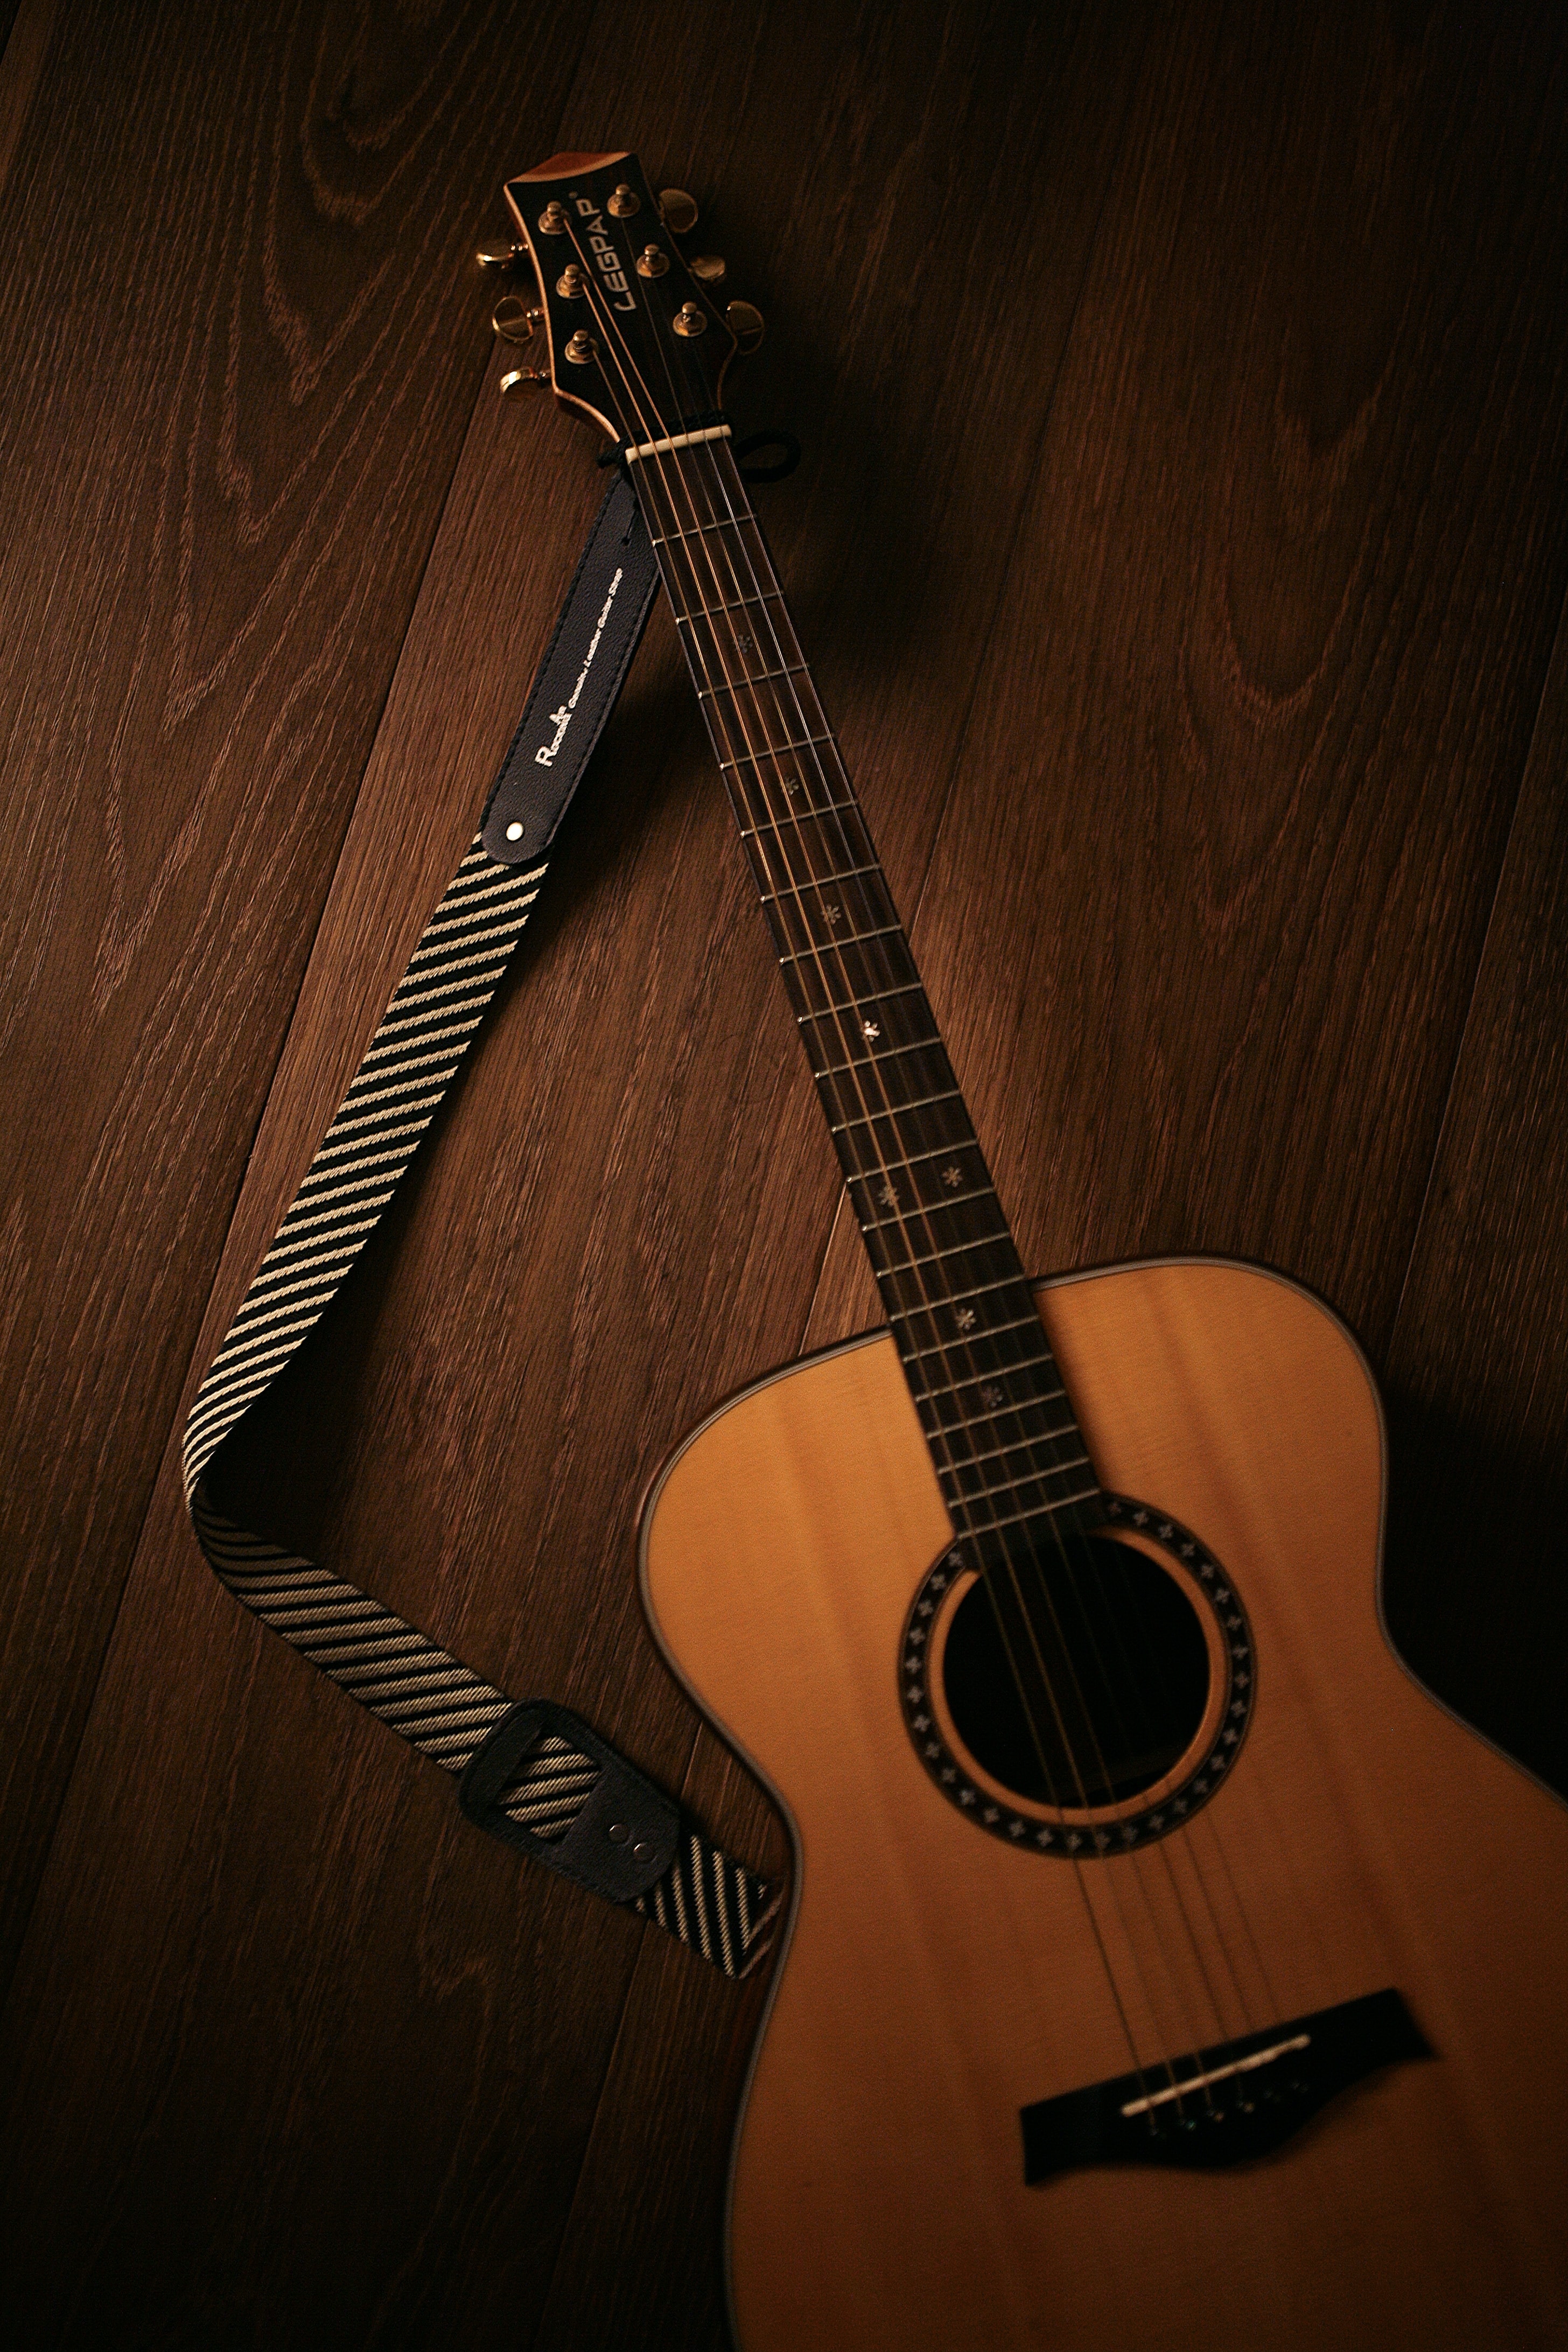 guitar, music, brown, acoustic guitar, musical instrument, wood, wooden iphone wallpaper